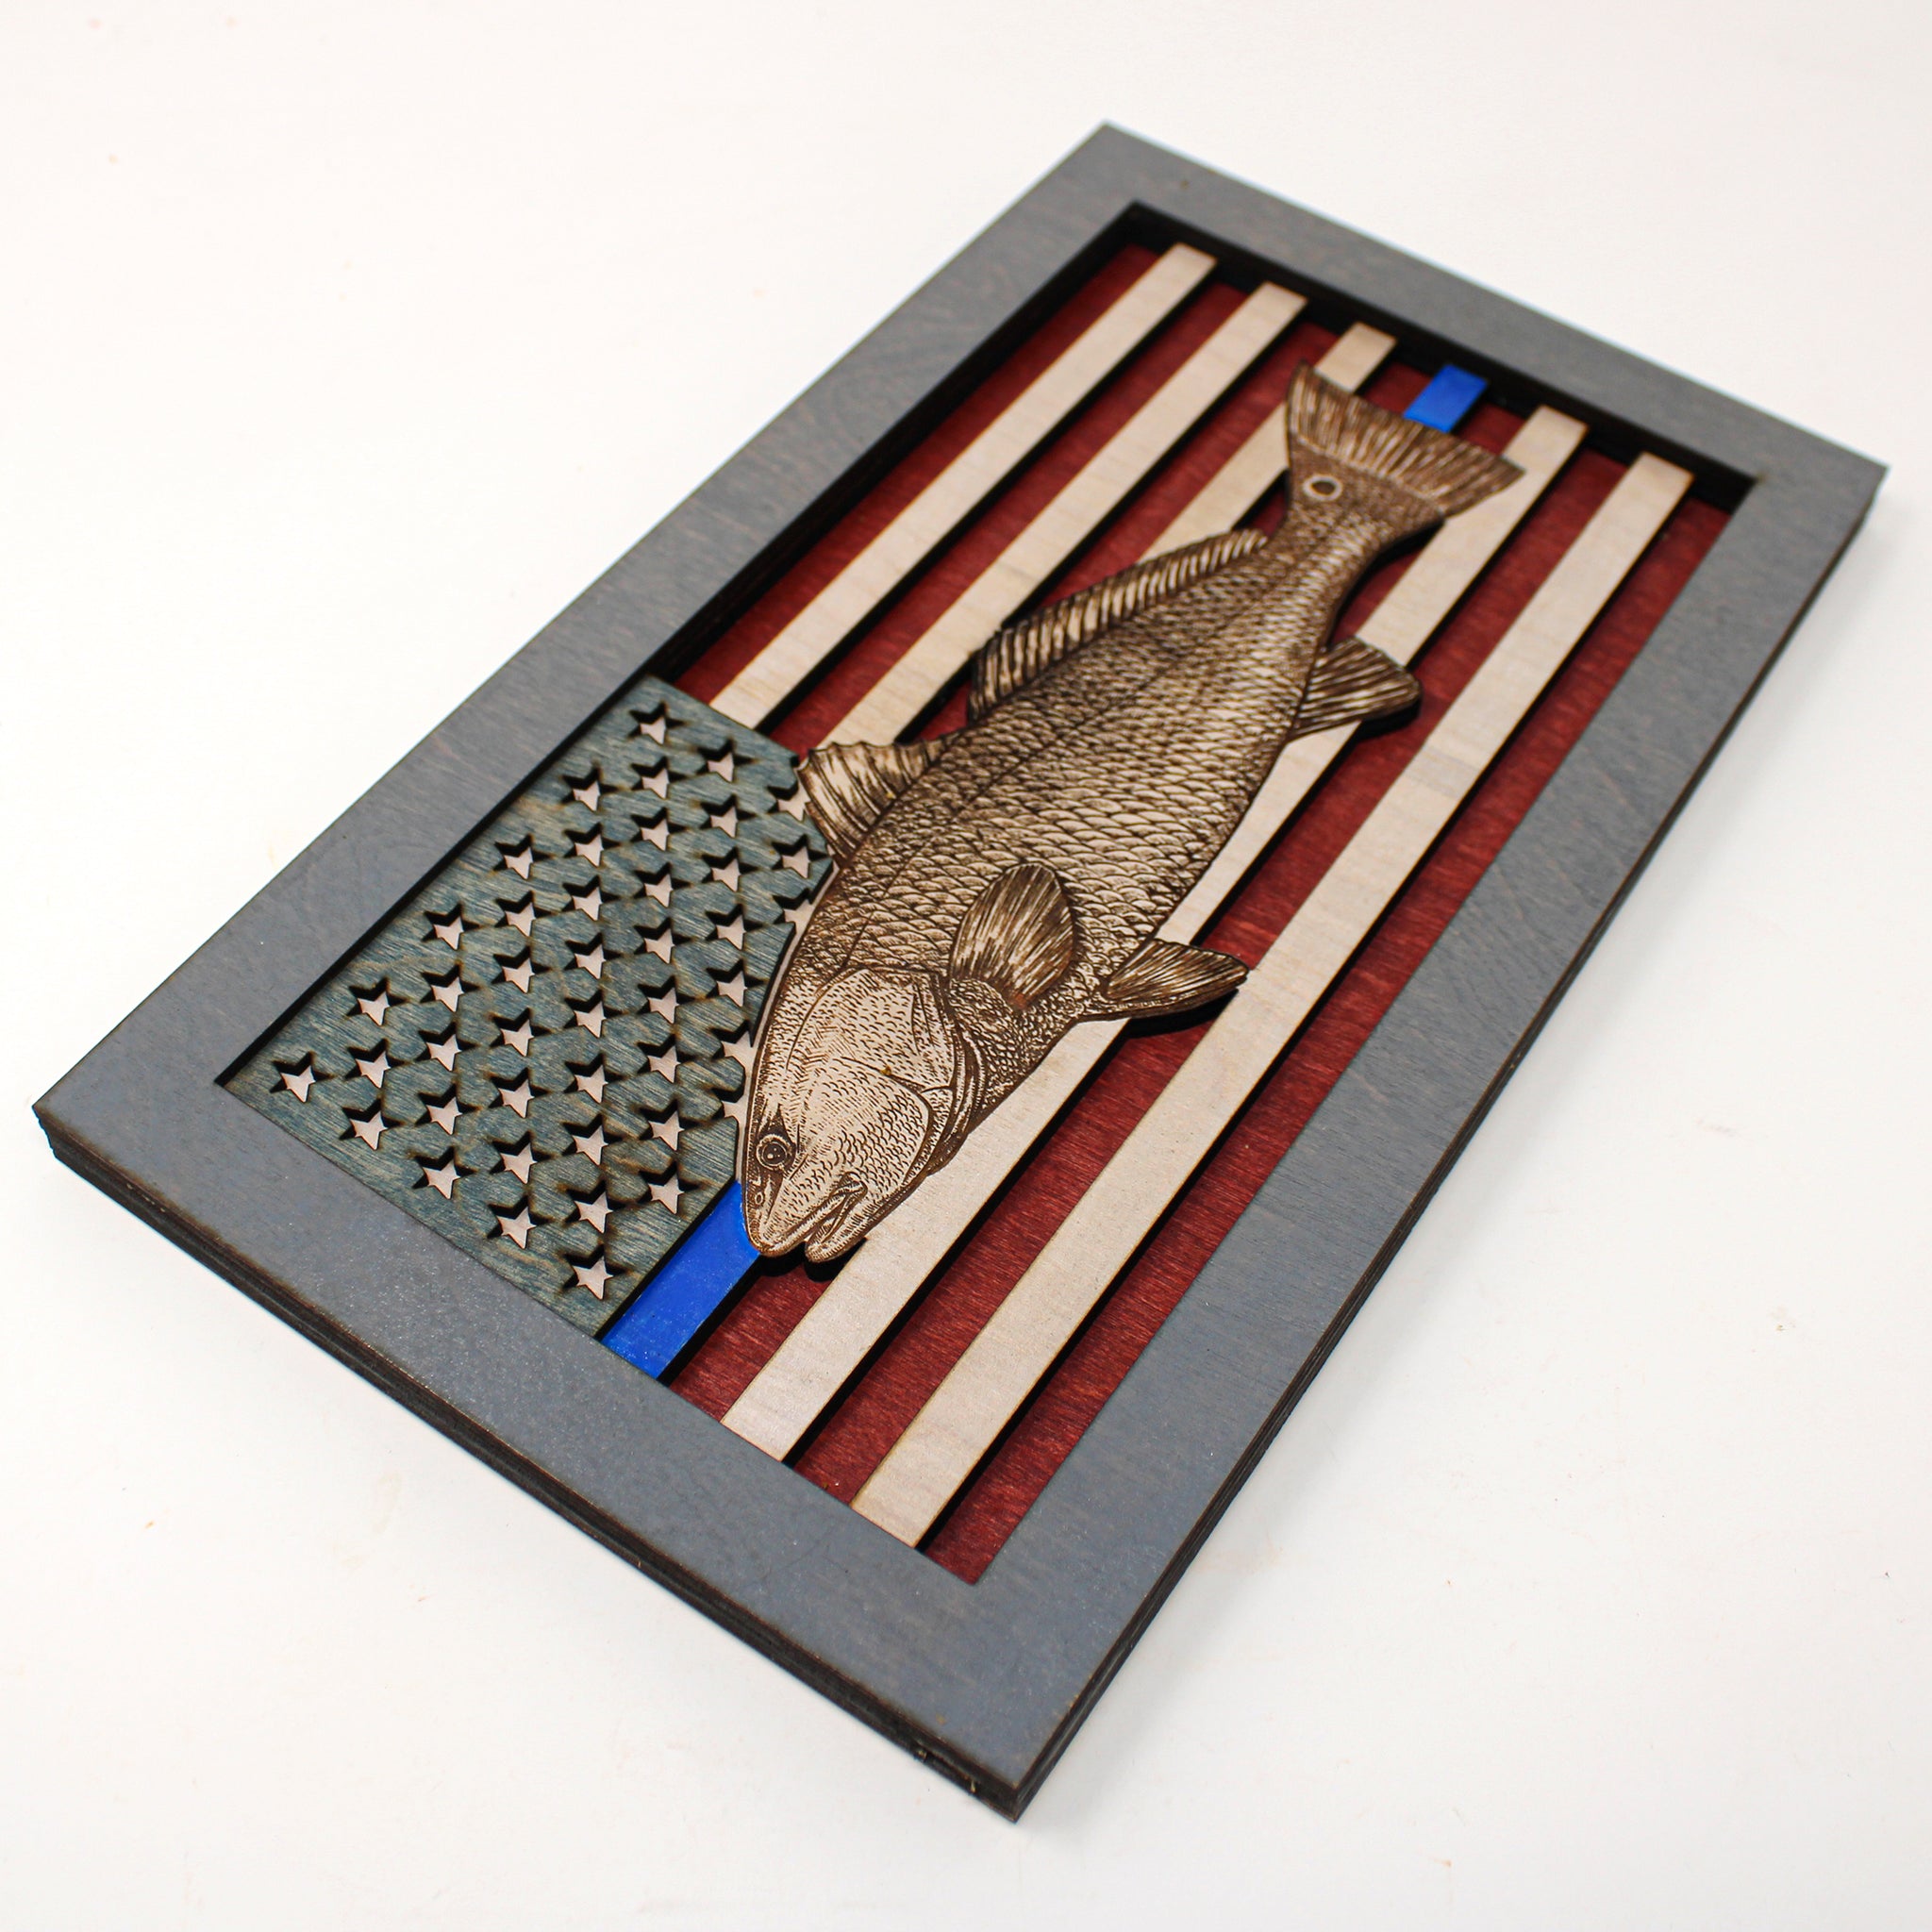 Wall Art - Deputy Magli Redfish American Flag 3D Wood Art